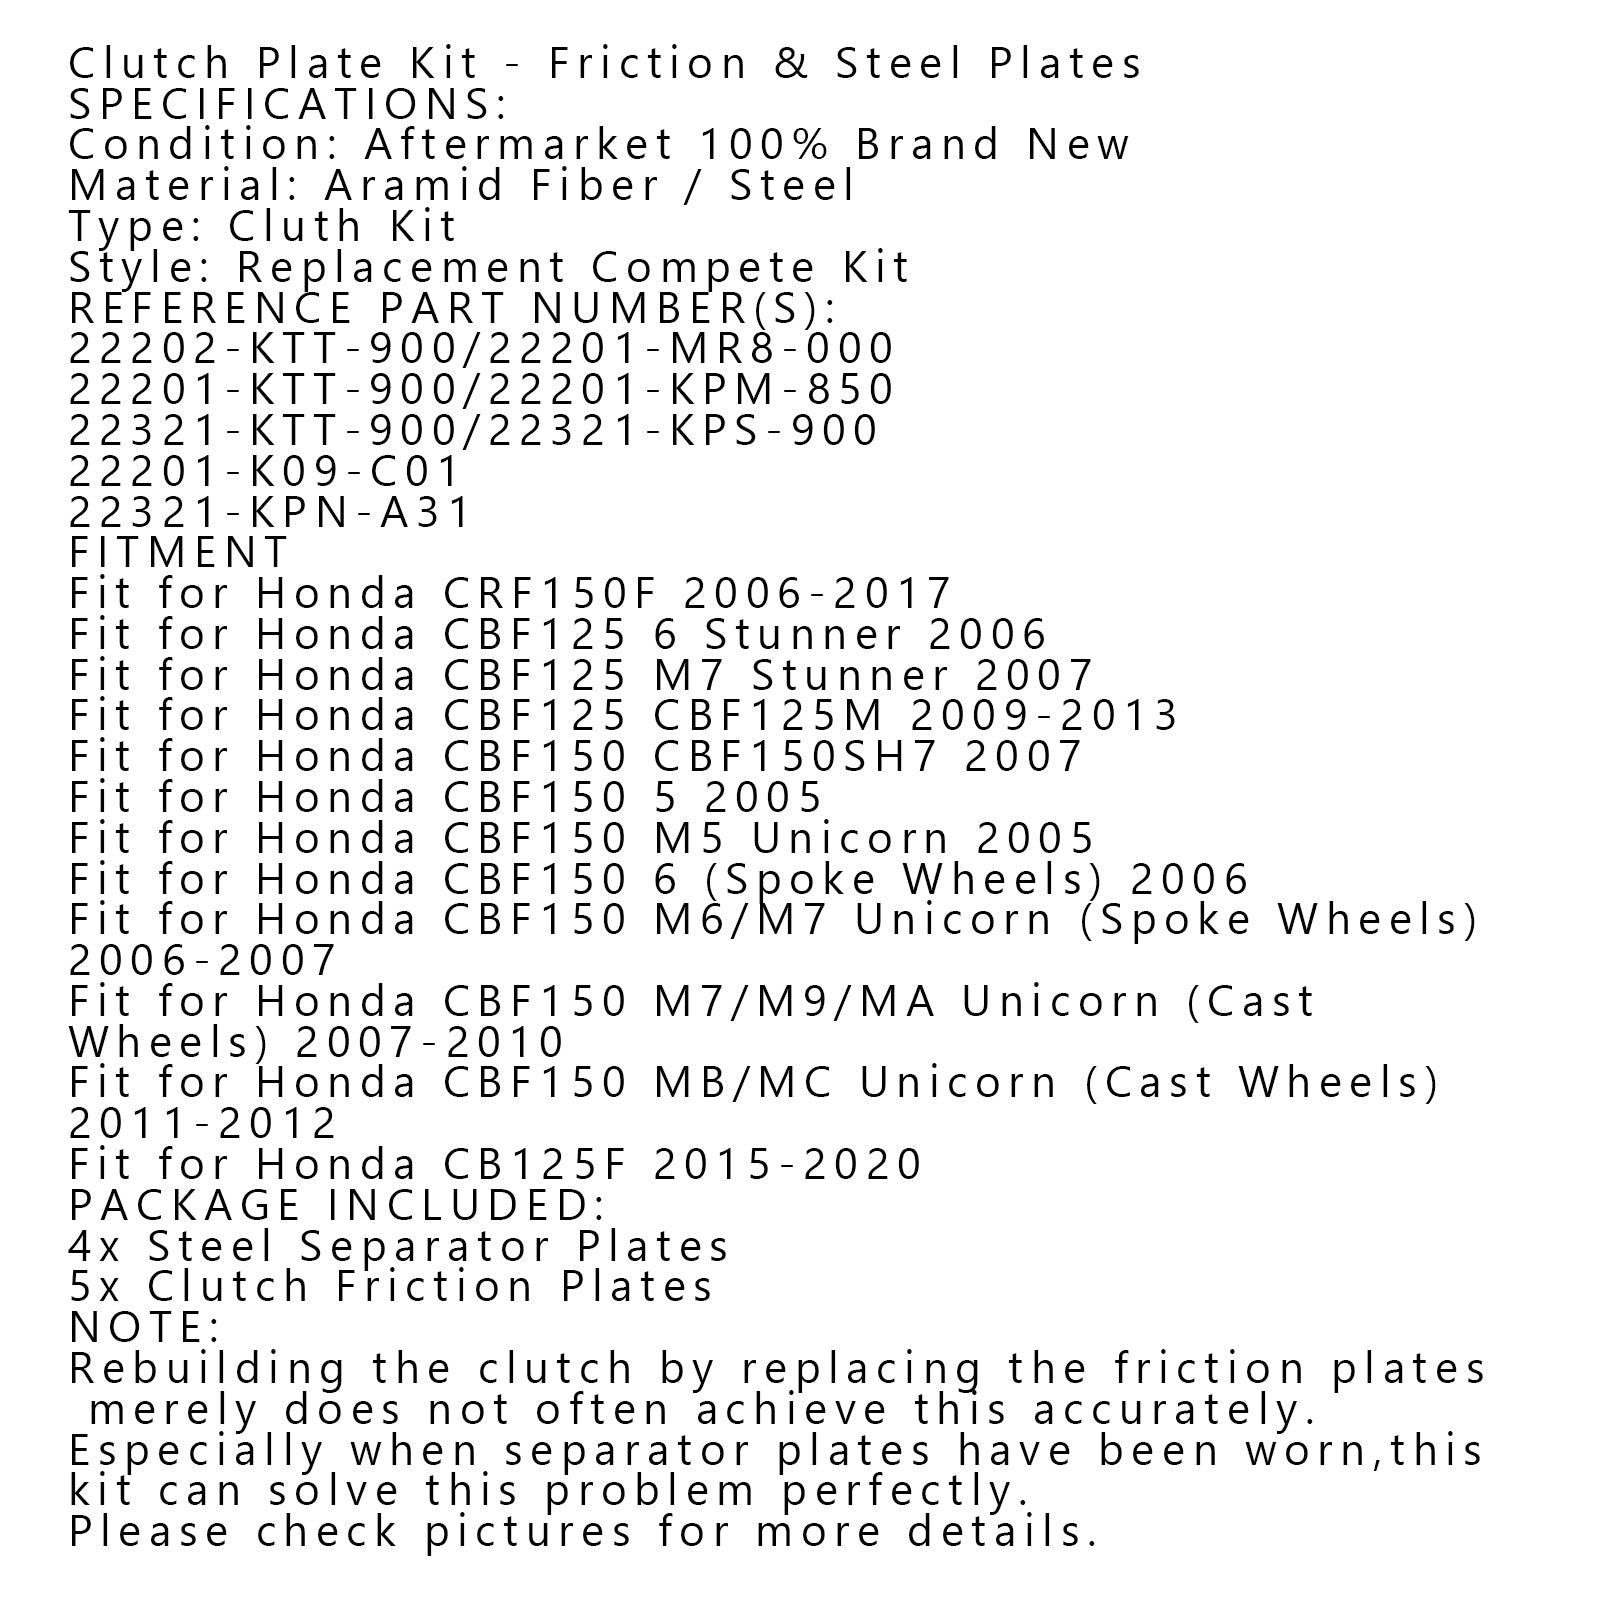 Clutch Kit Steel & Friction Plates fit for Honda CBF125 CBF150 CRF150F CB125F